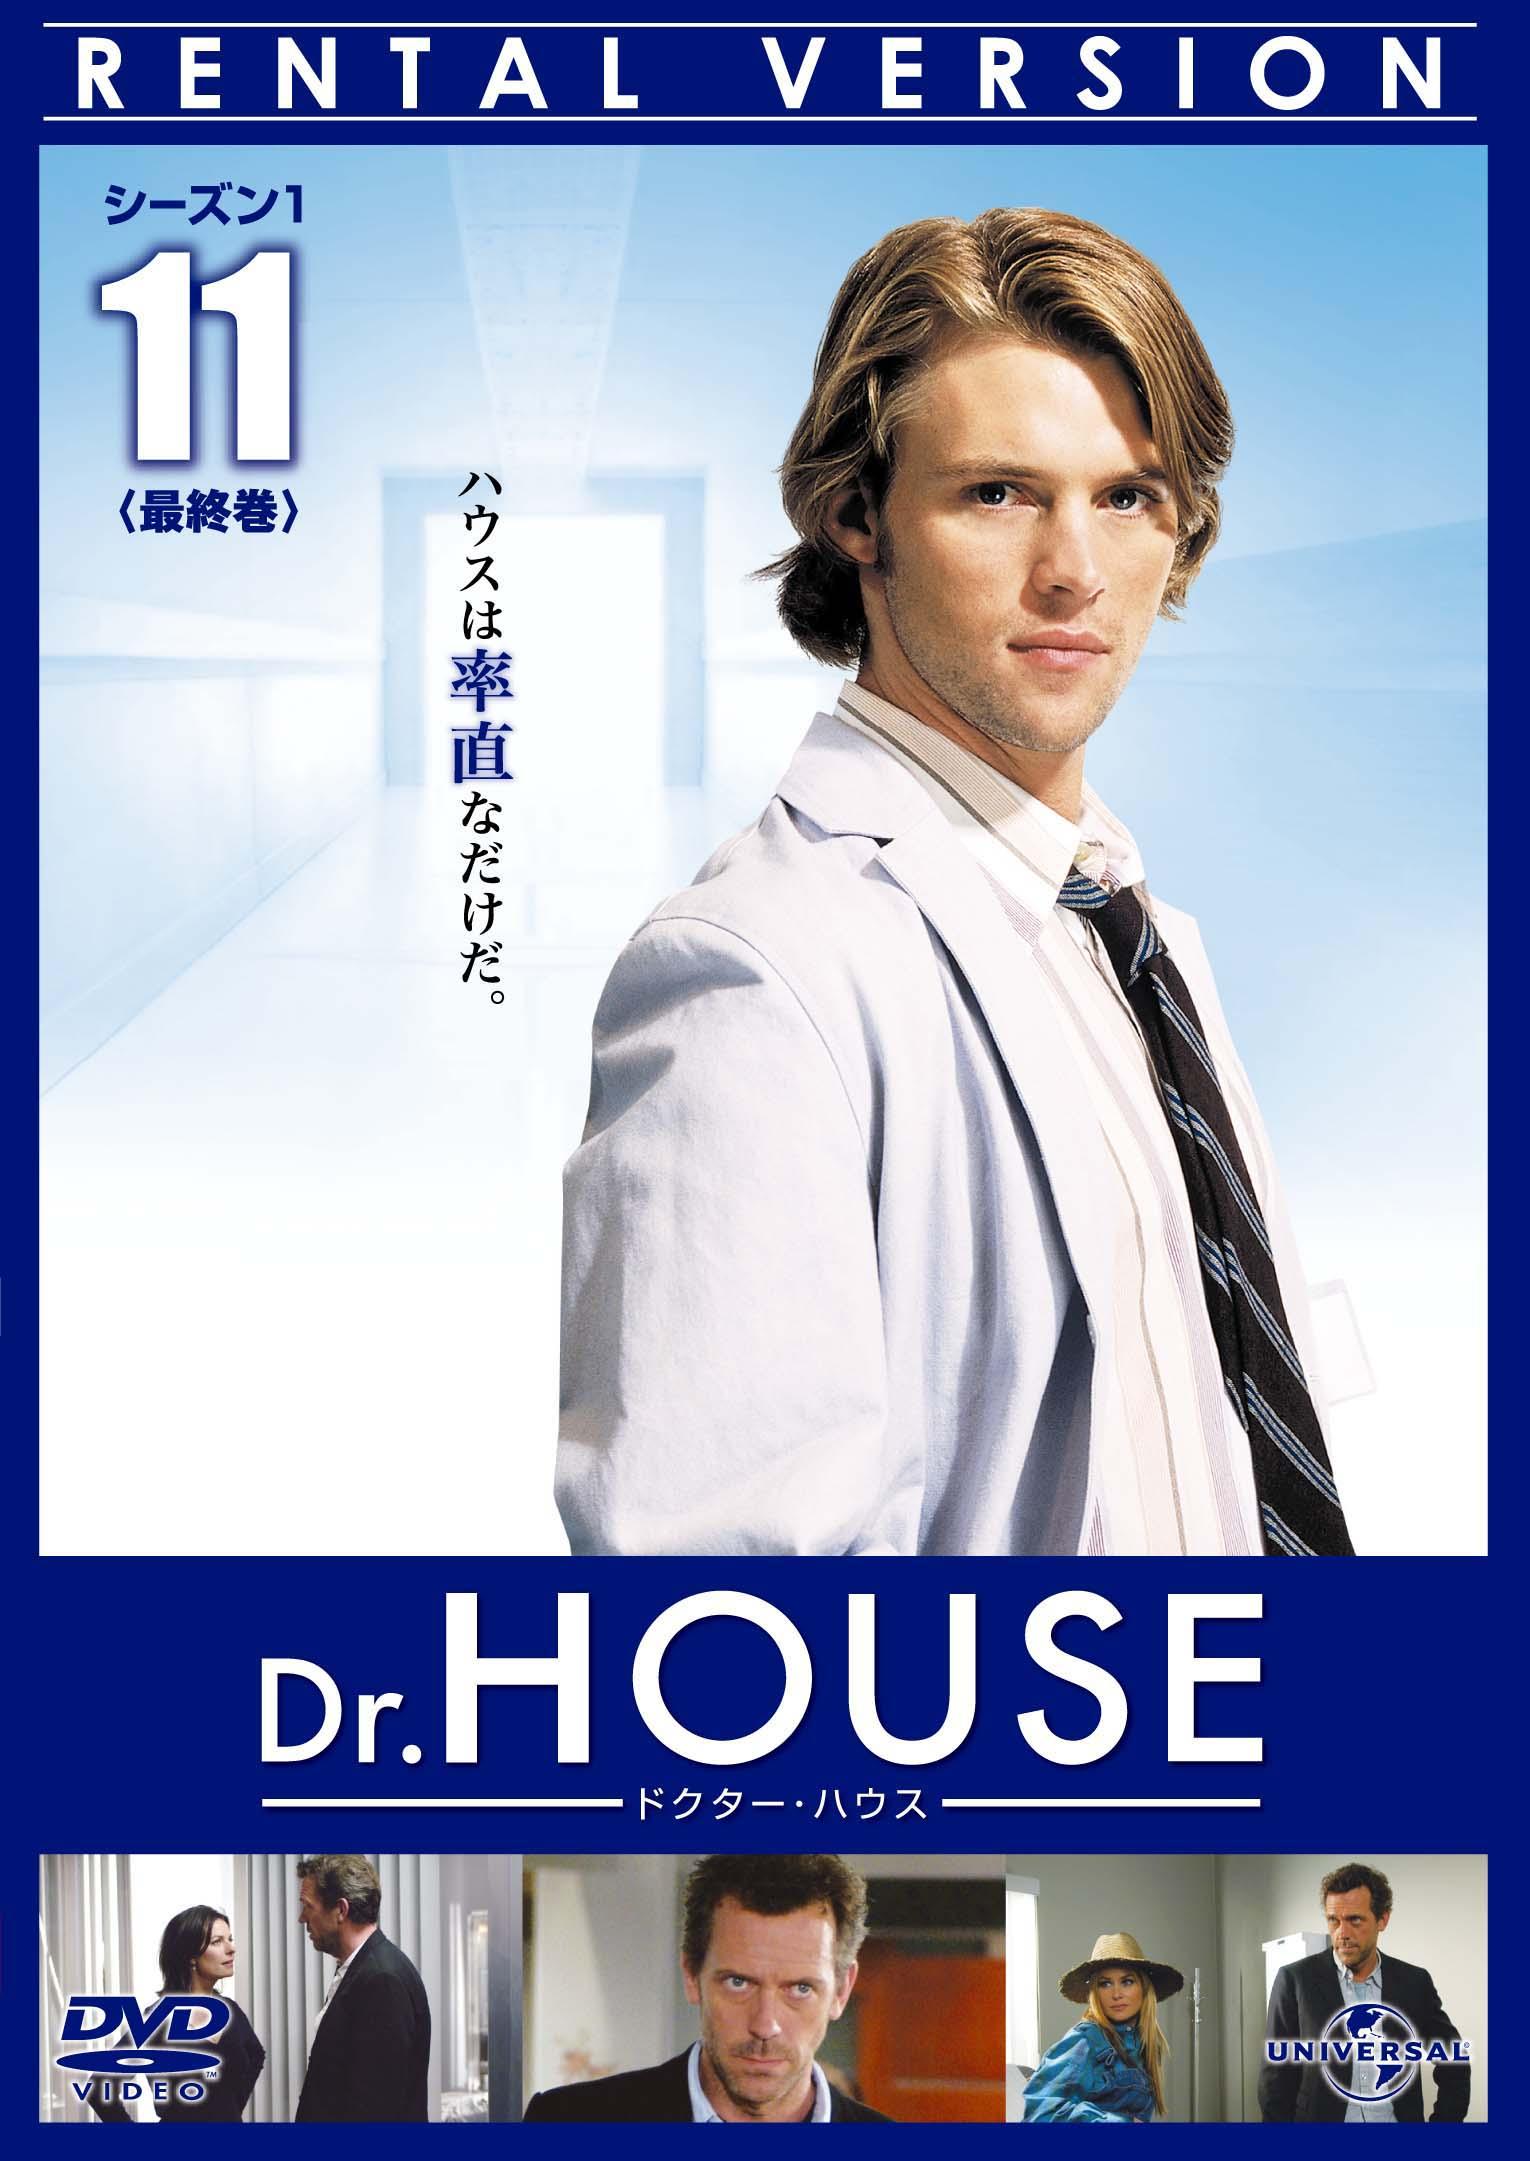 Dr.HOUSE ドクター・ハウス コンプリート ブルーレイBOX〈初回限定生…+